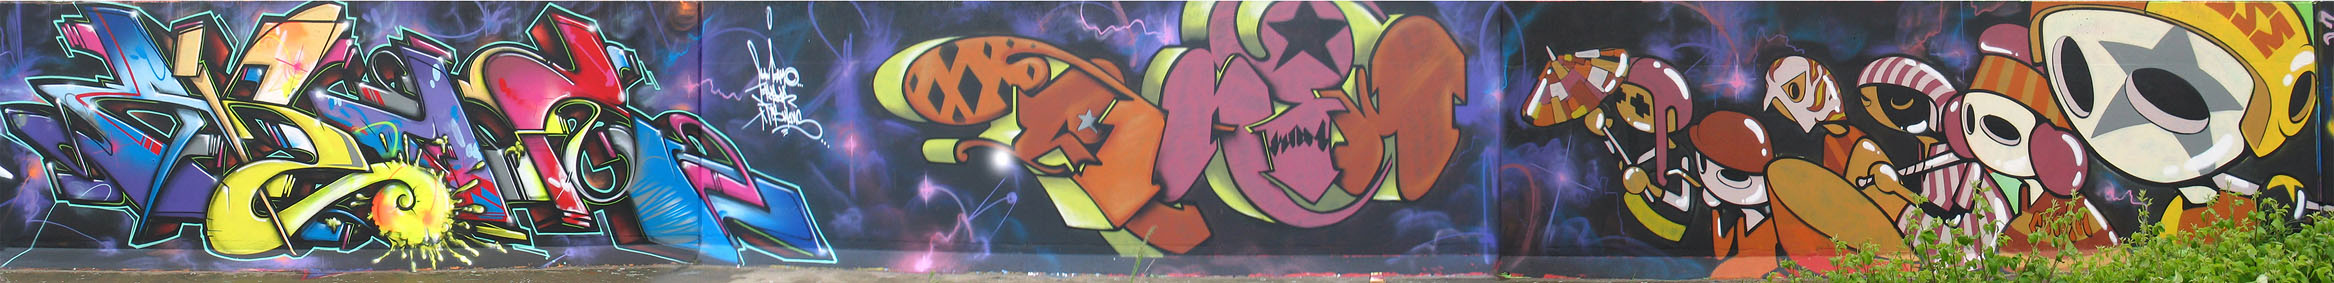 etnik - tosh - graffiti